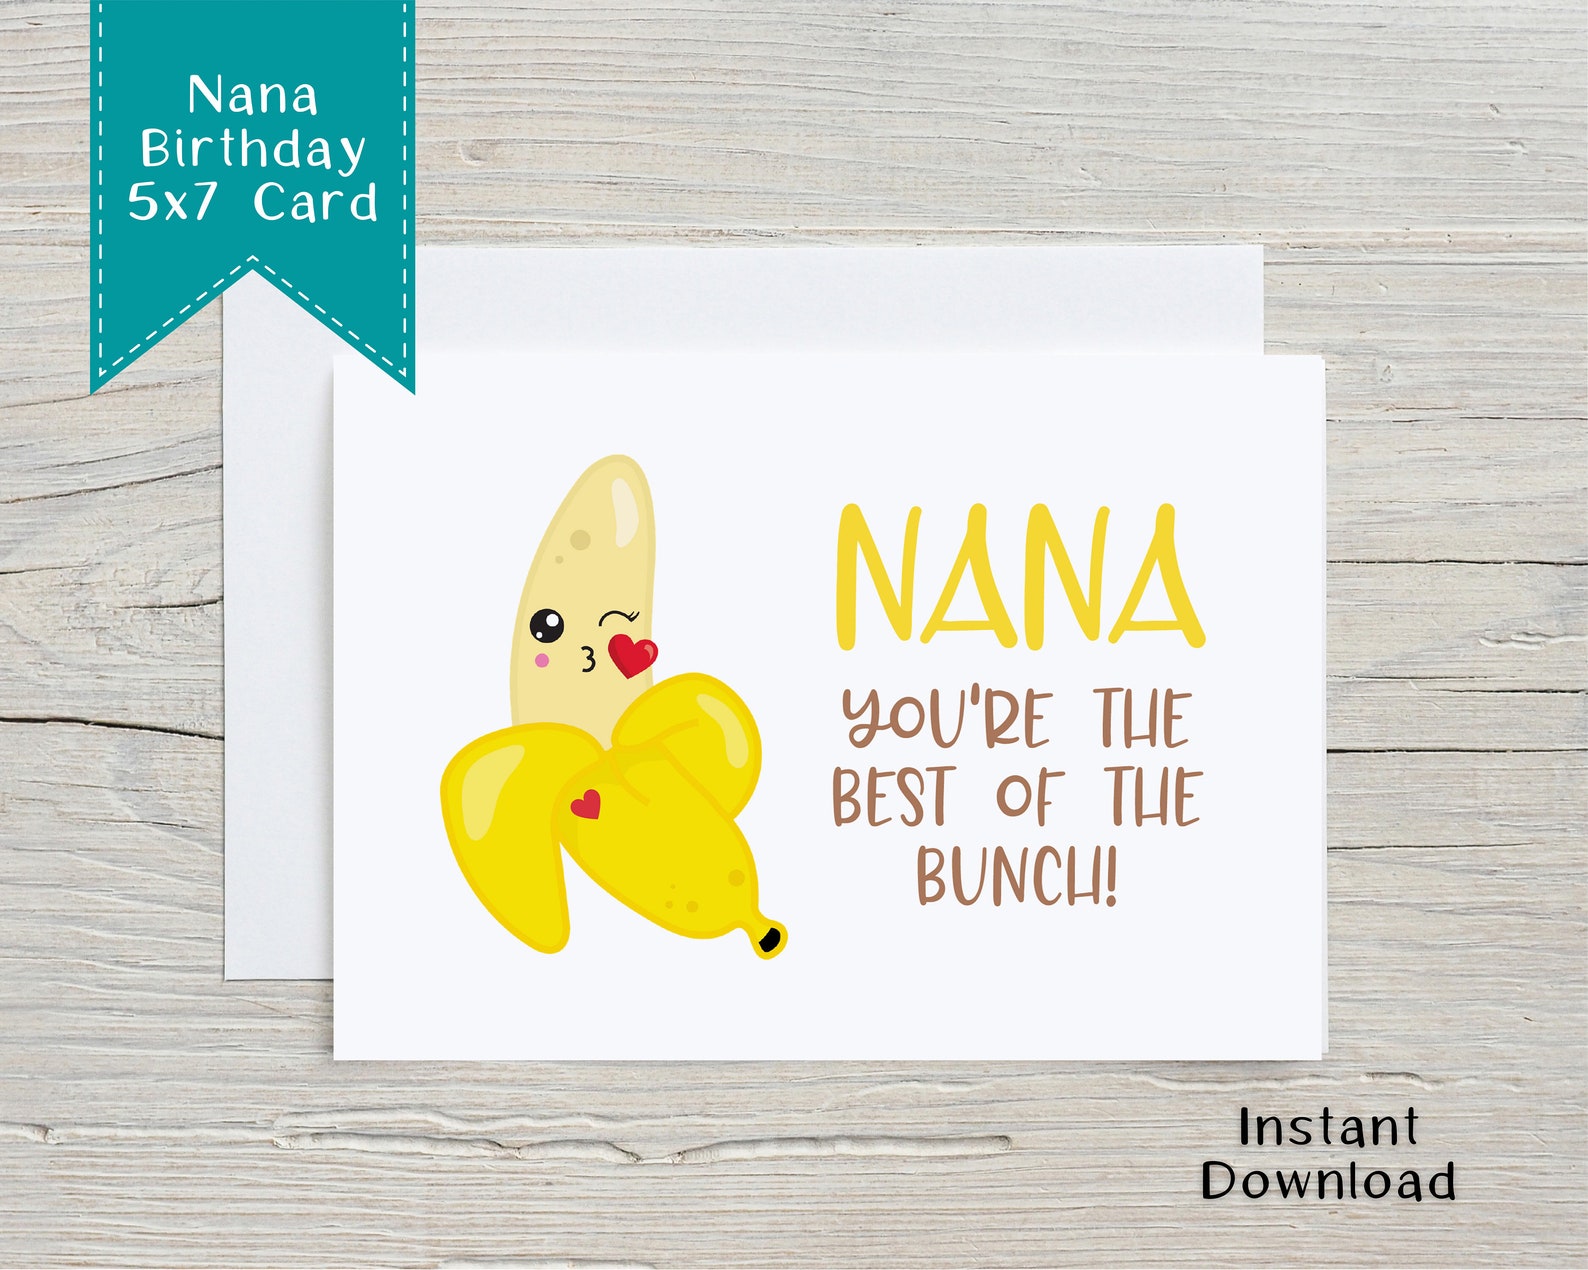 nana-birthday-card-printable-nana-happy-birthday-nana-etsy